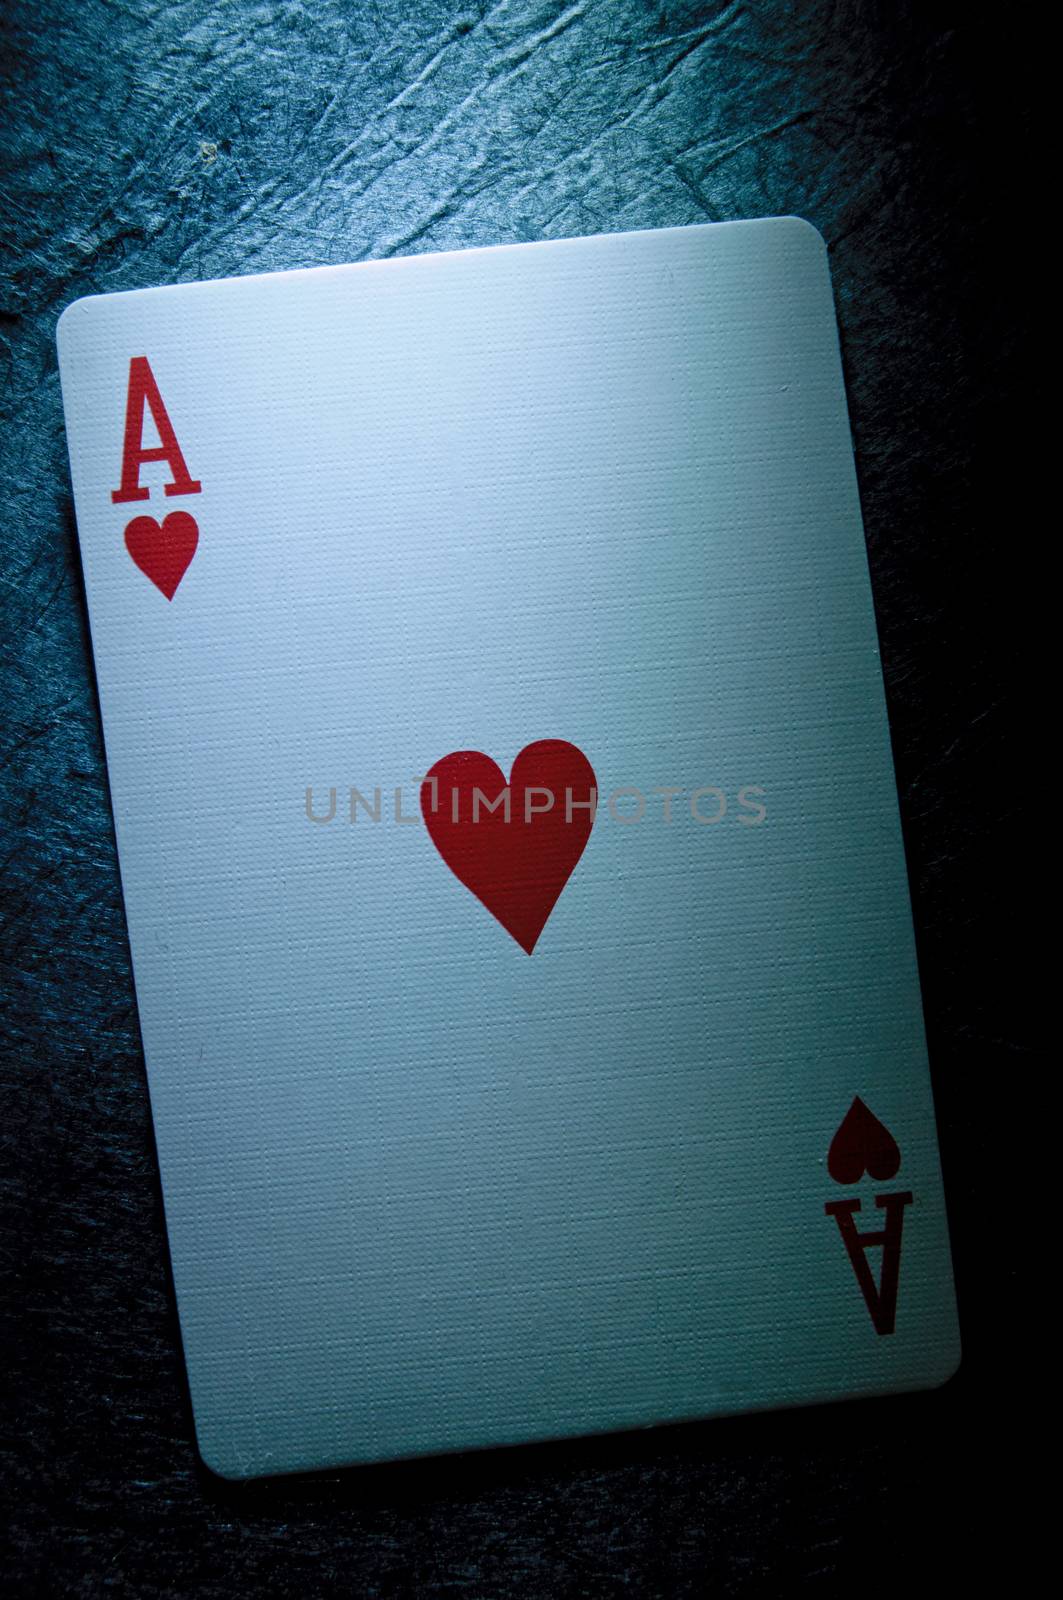 Ace card  by unikpix